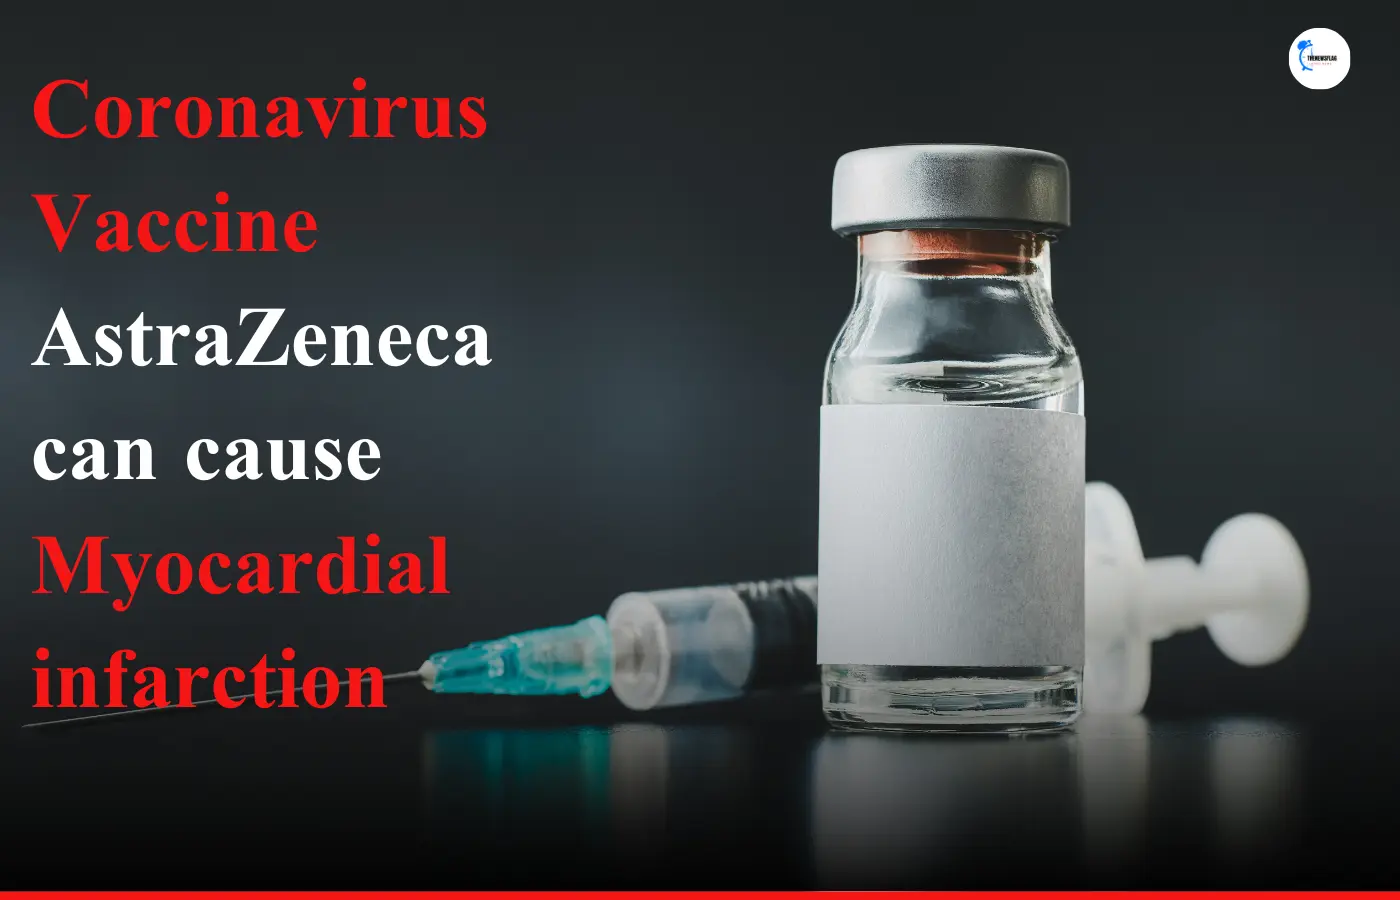 Coronavirus Vaccine AstraZeneca can cause Myocardial infarction